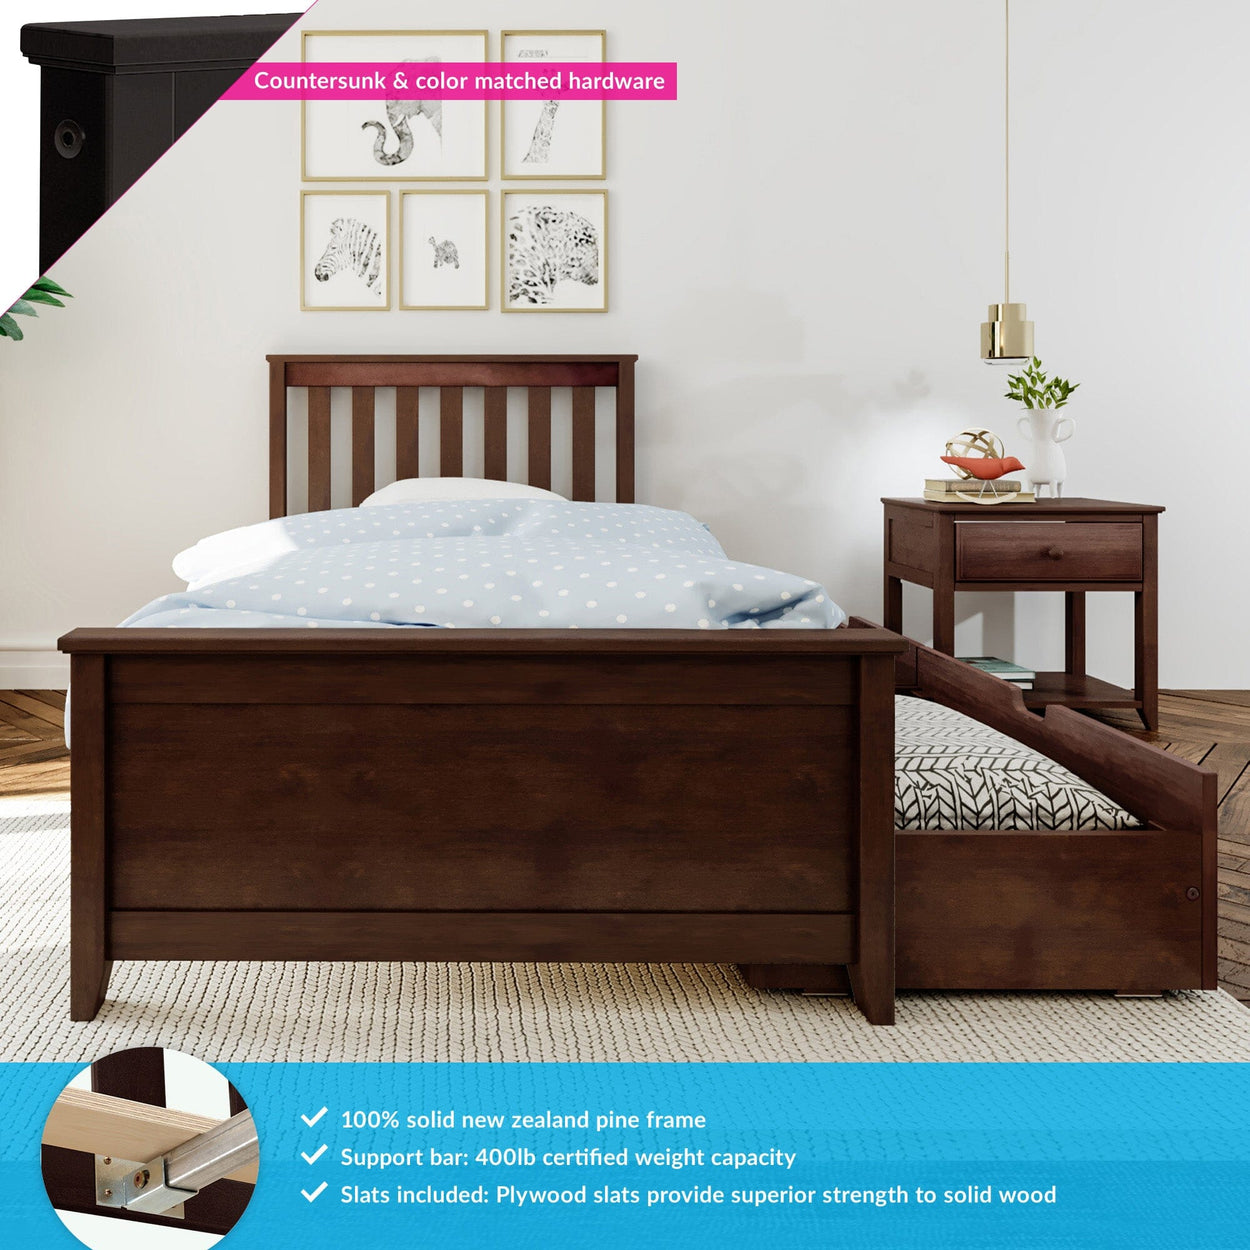 187210-005 : Kids Beds Twin-Size Platform Bed with Underbed Storage Drawers, Espresso